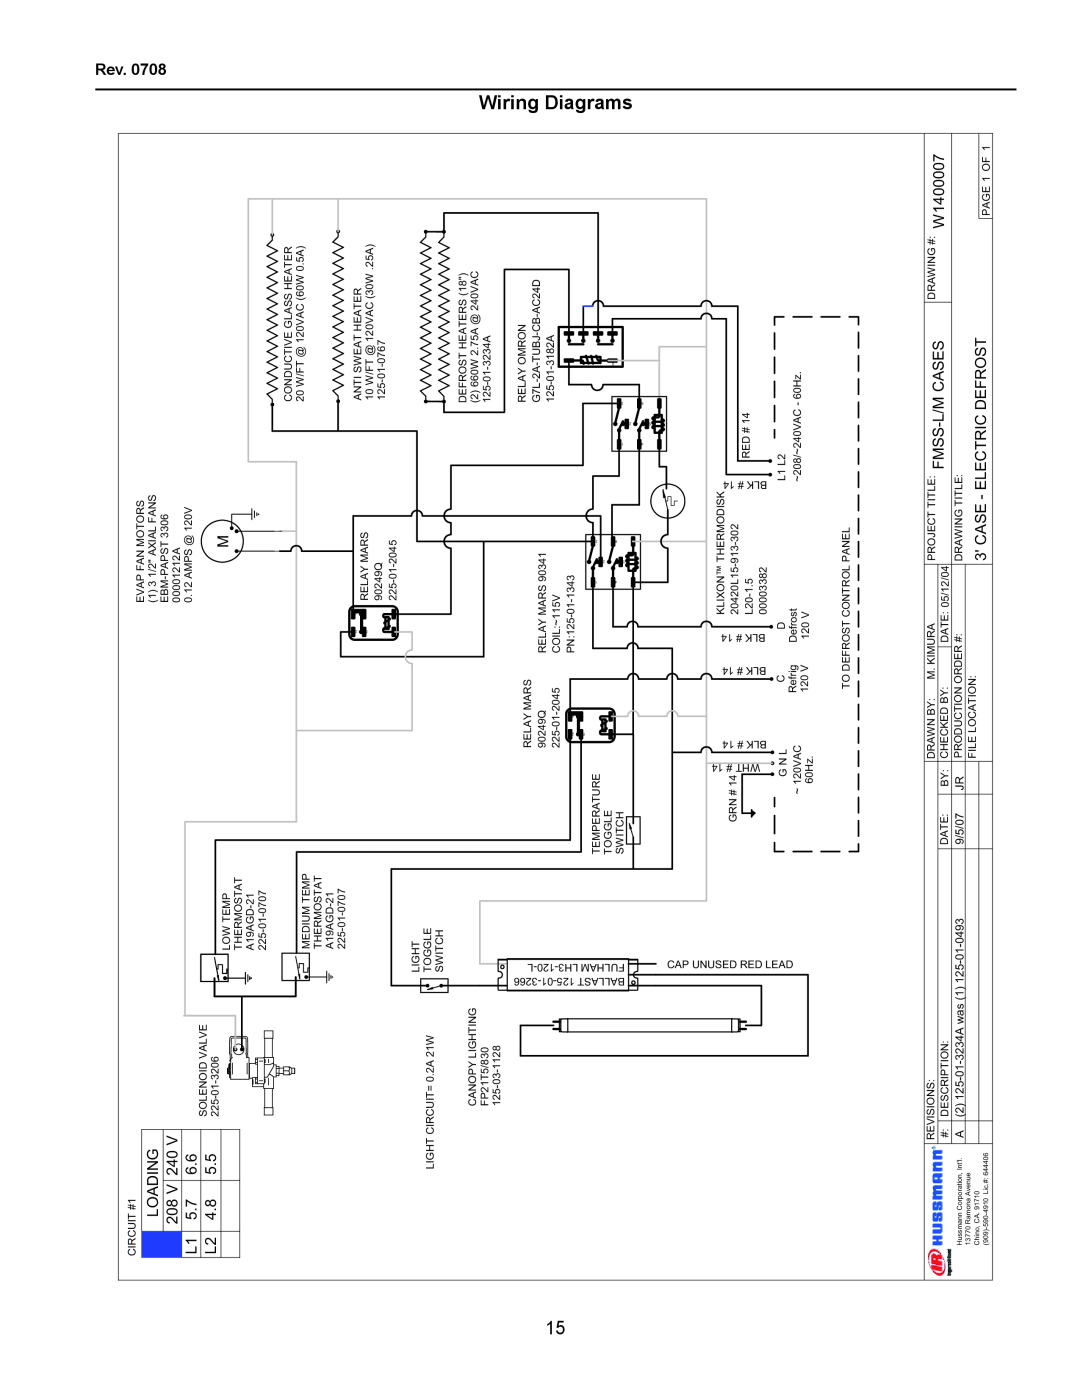 hussman FMSS-L operation manual Wiring Diagrams, LOADING 208 V 240 L1 5.7 L2, Case - Electric Defrost 